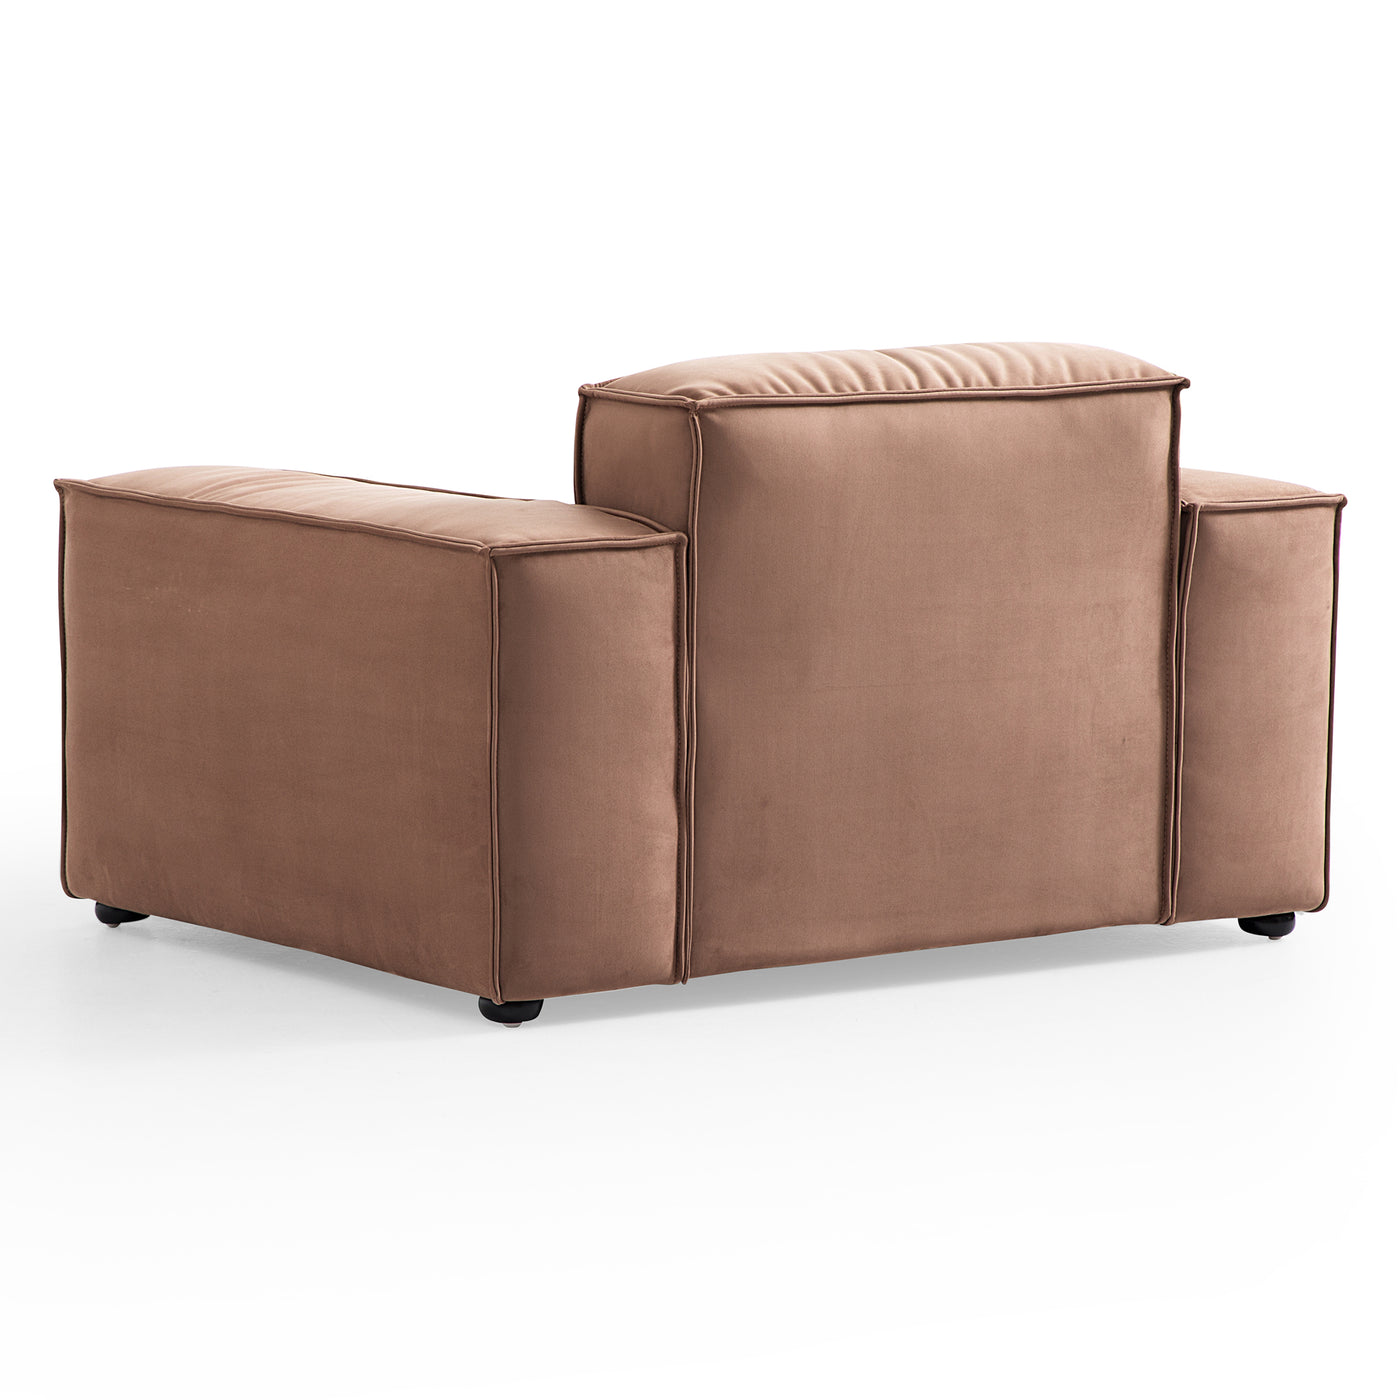 Luxury Minimalist Brown Fabric Armchair-Brown